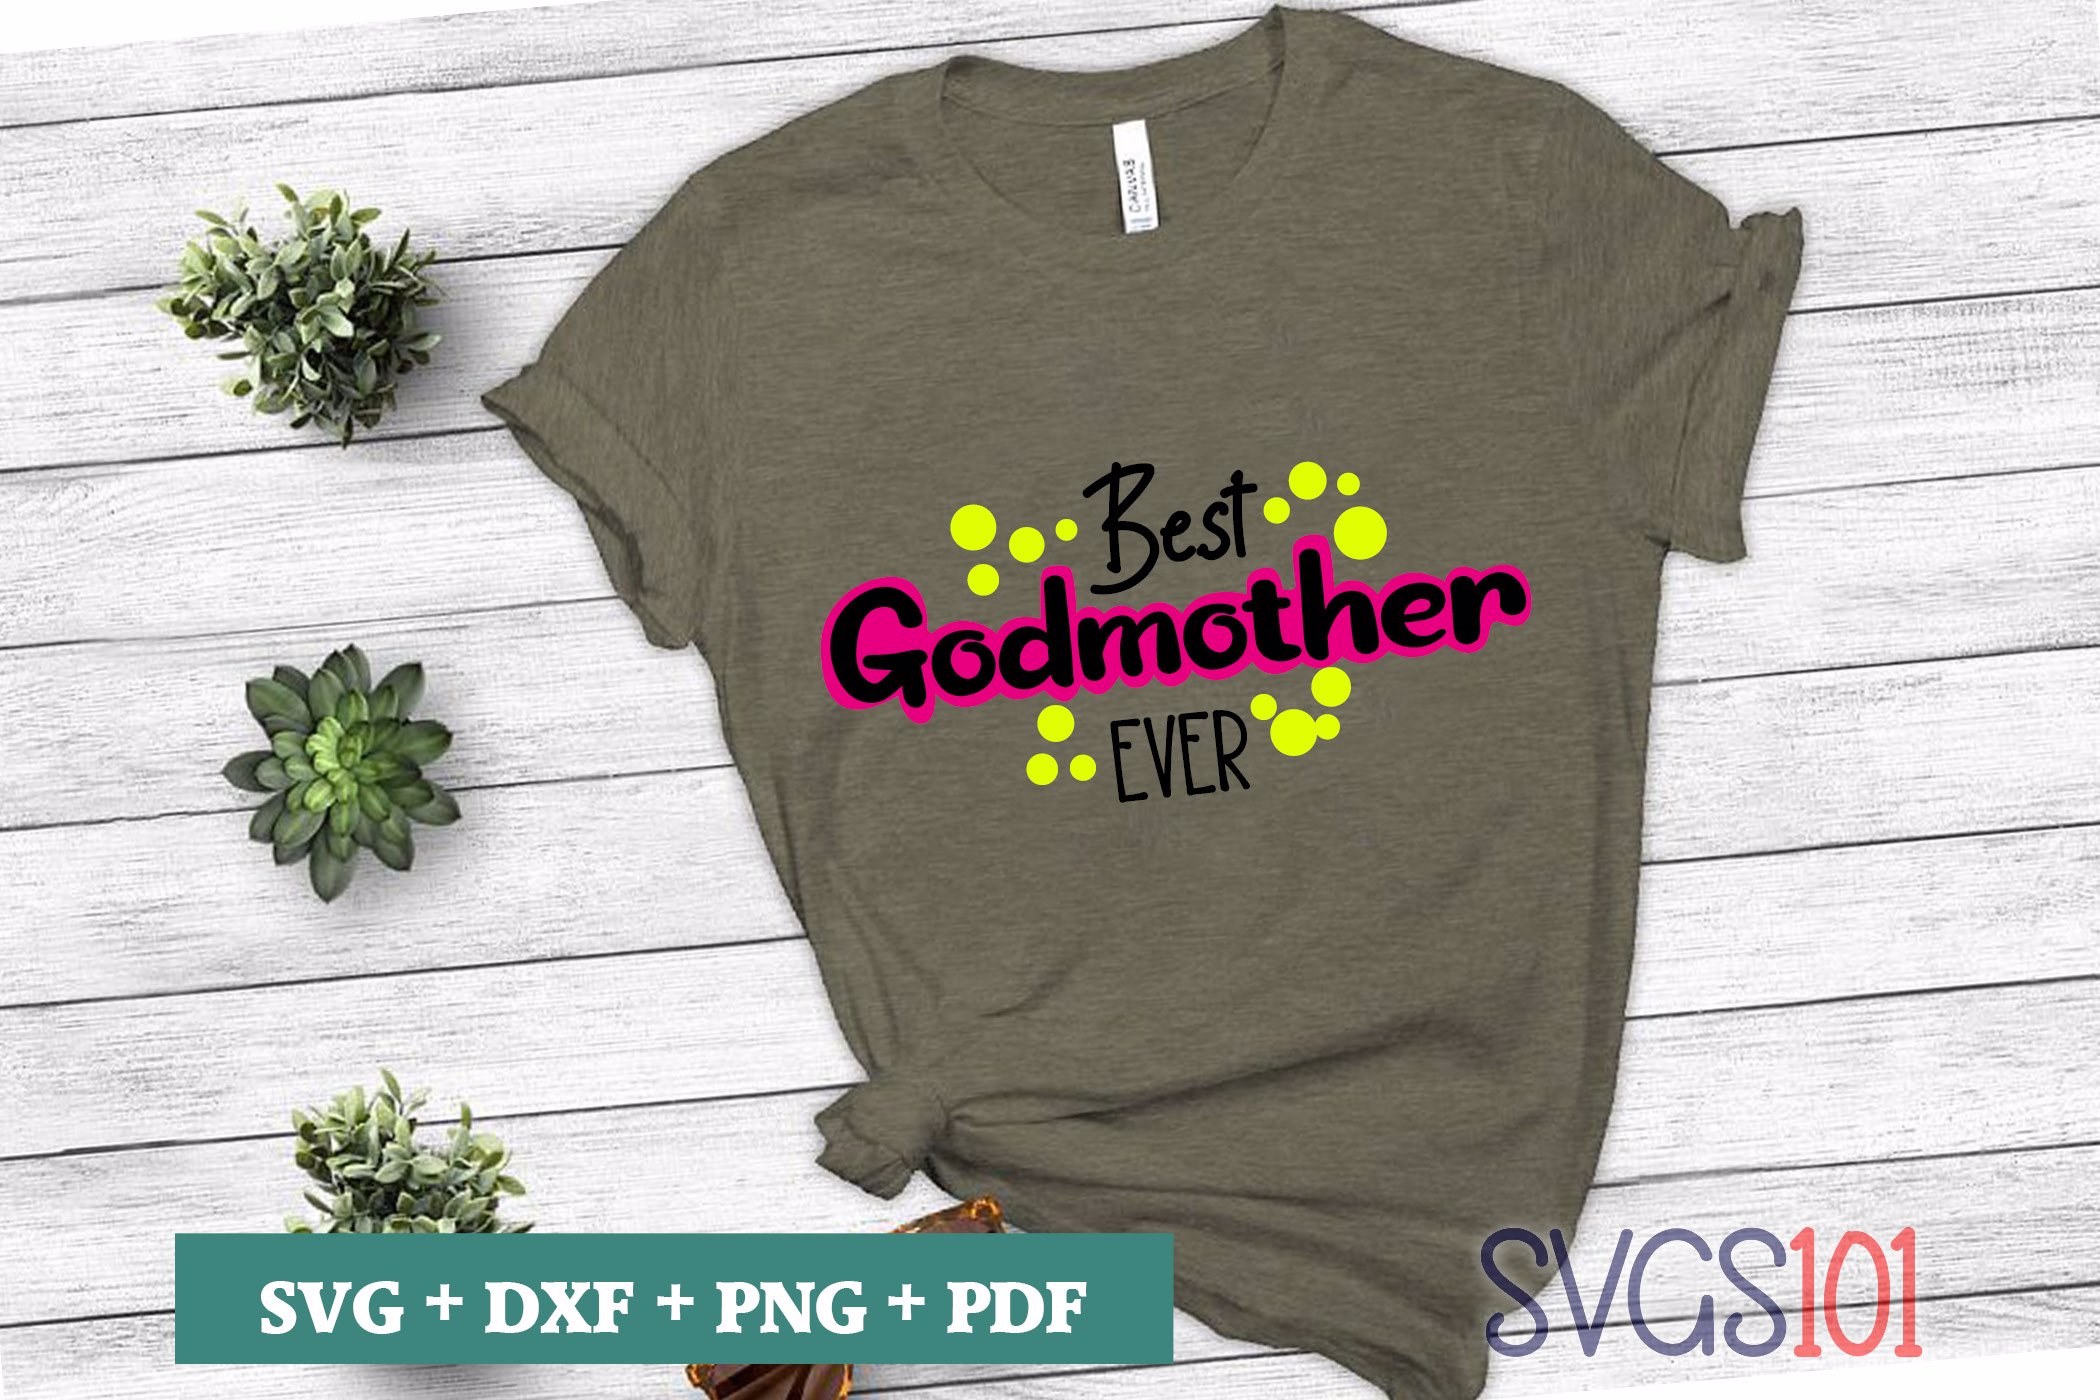 Download Best godmother ever SVG Cuttable file - DXF, EPS, PNG, PDF ...